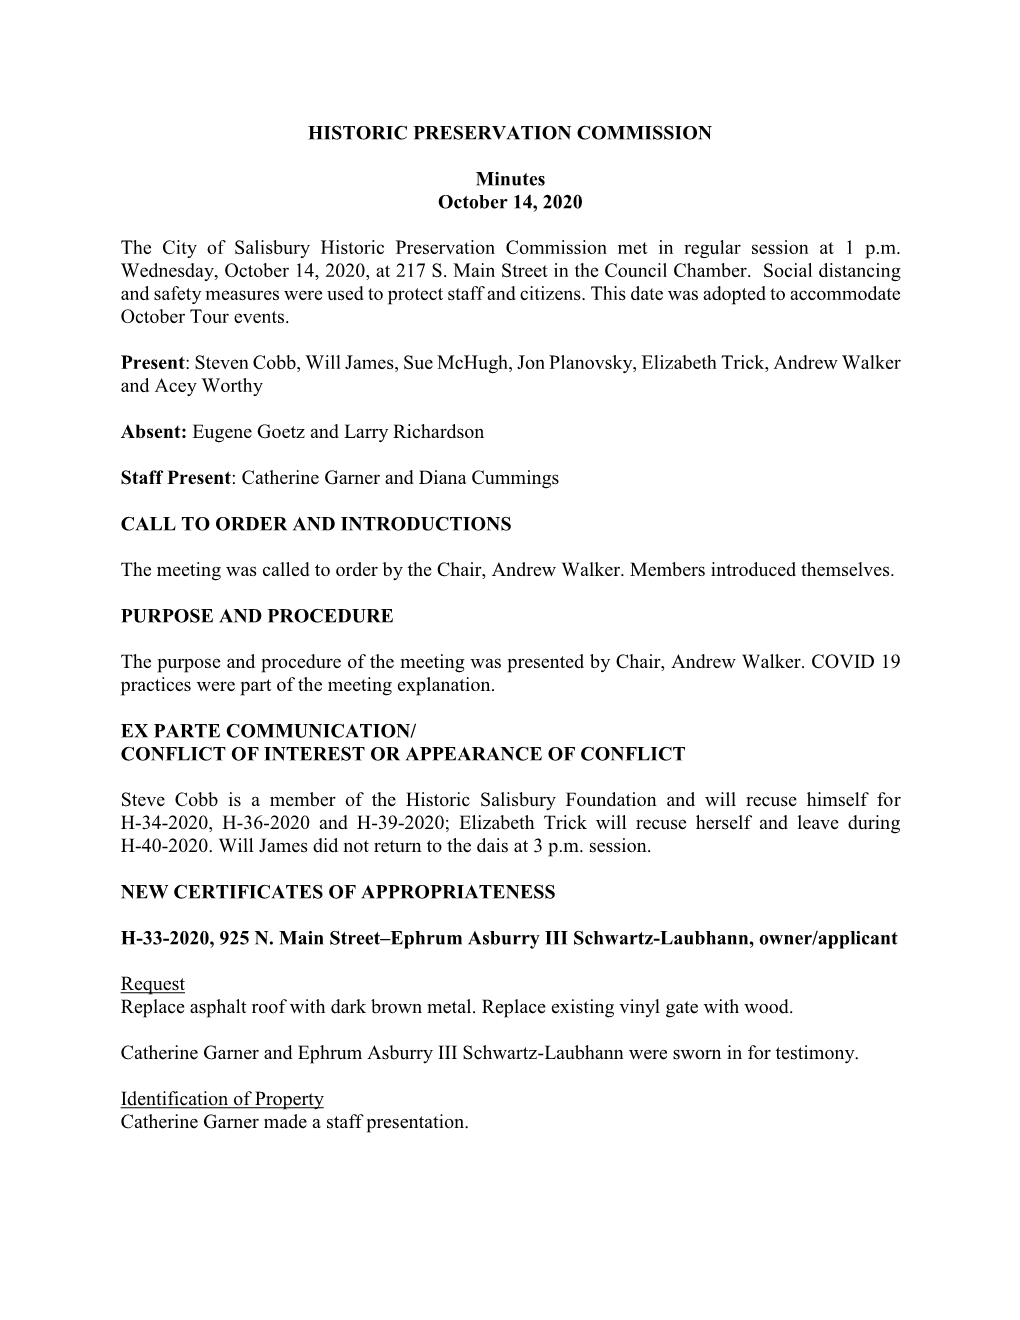 HISTORIC PRESERVATION COMMISSION Minutes October 14, 2020 the City of Salisbury Historic Preservation Commission Met in Regular